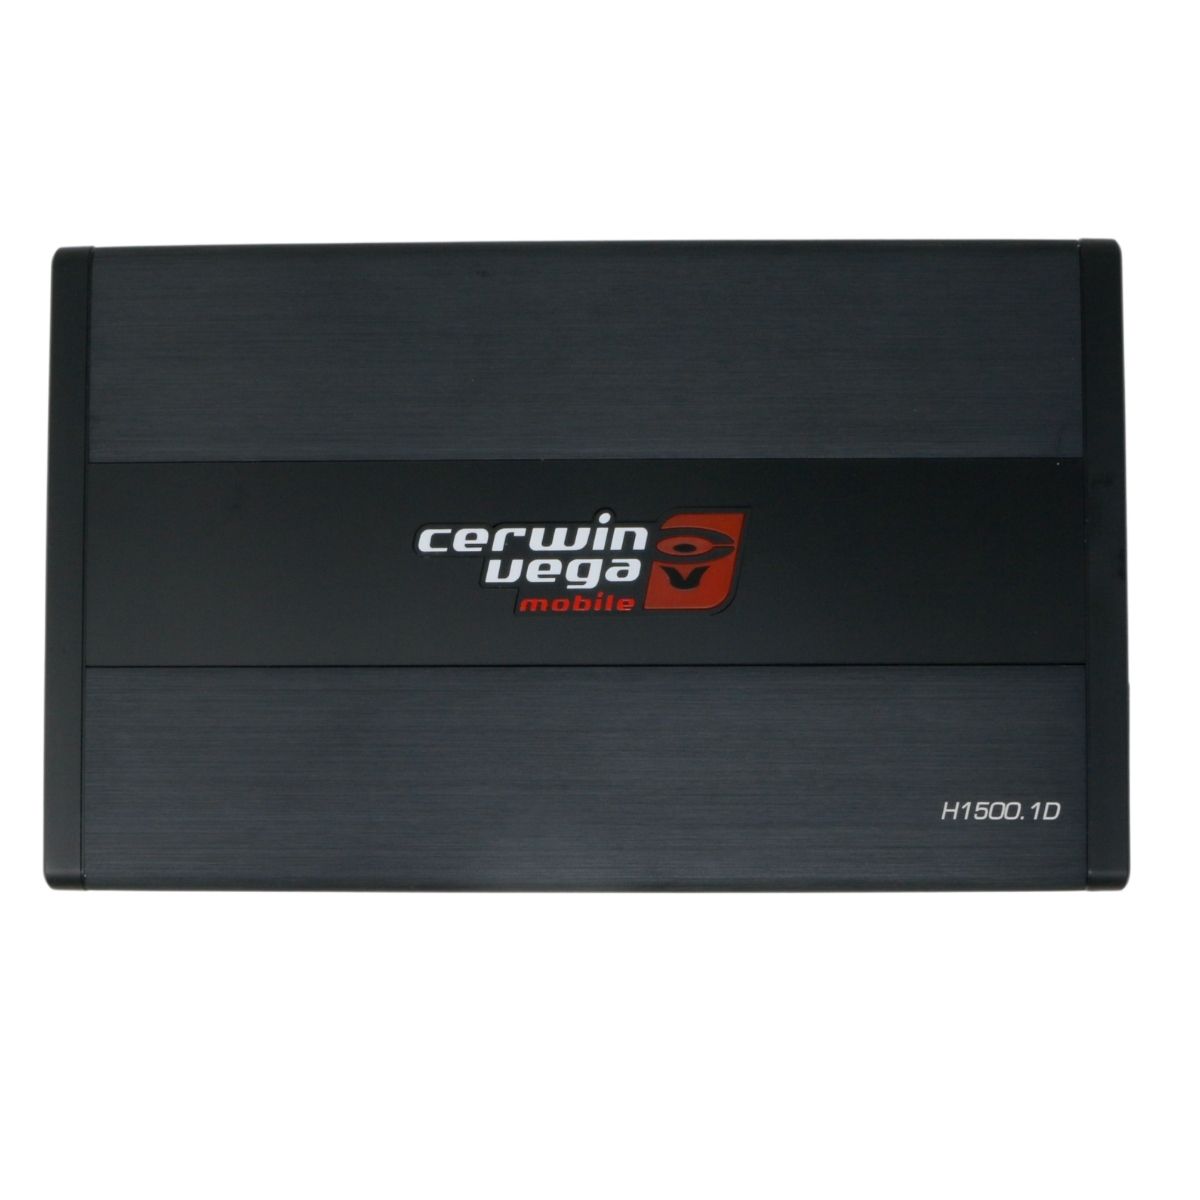 Cerwin Vega H1500.1D 1500W RMS Full Range Class-D Mono Digital Amplifier